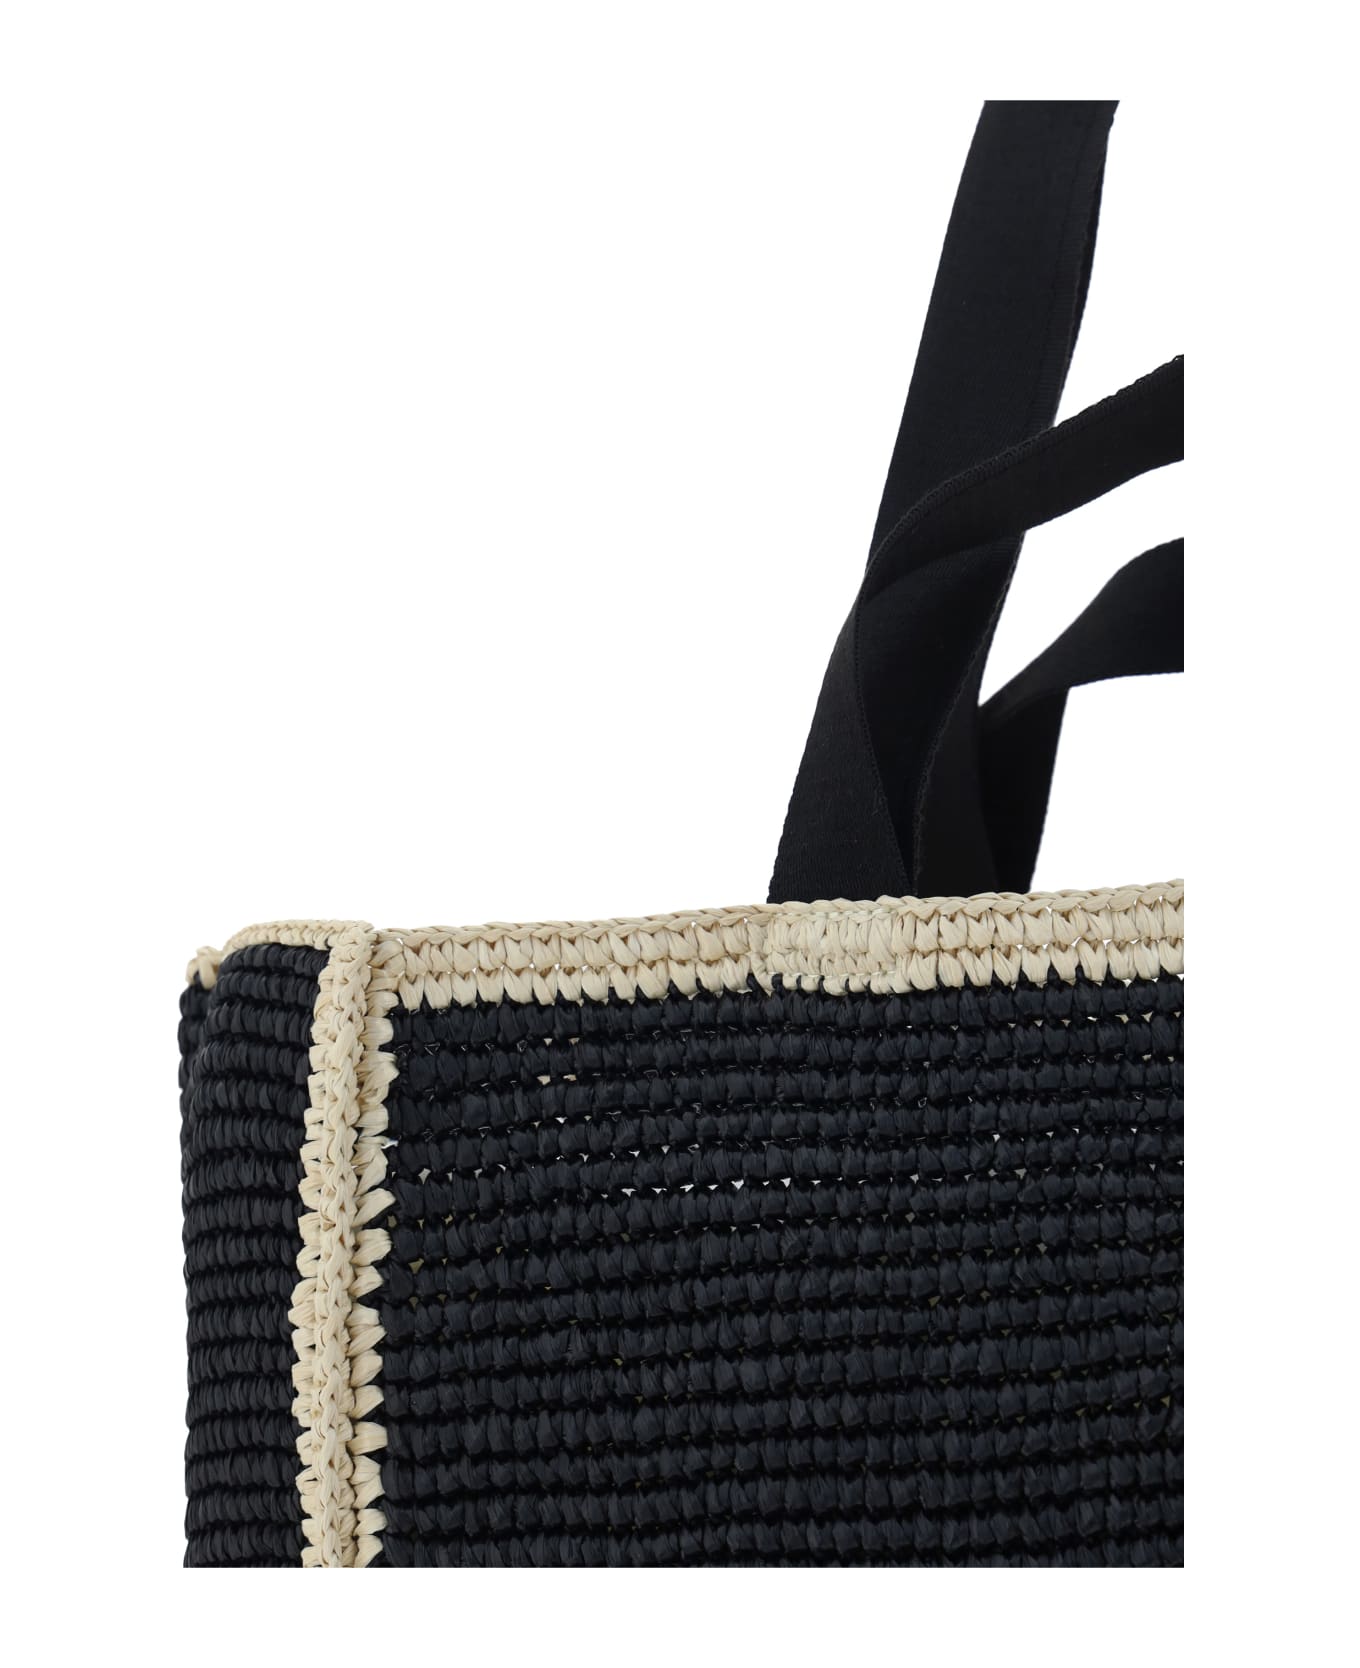 Marni Tote Sillo Medium Handbag - Black/ivory/black